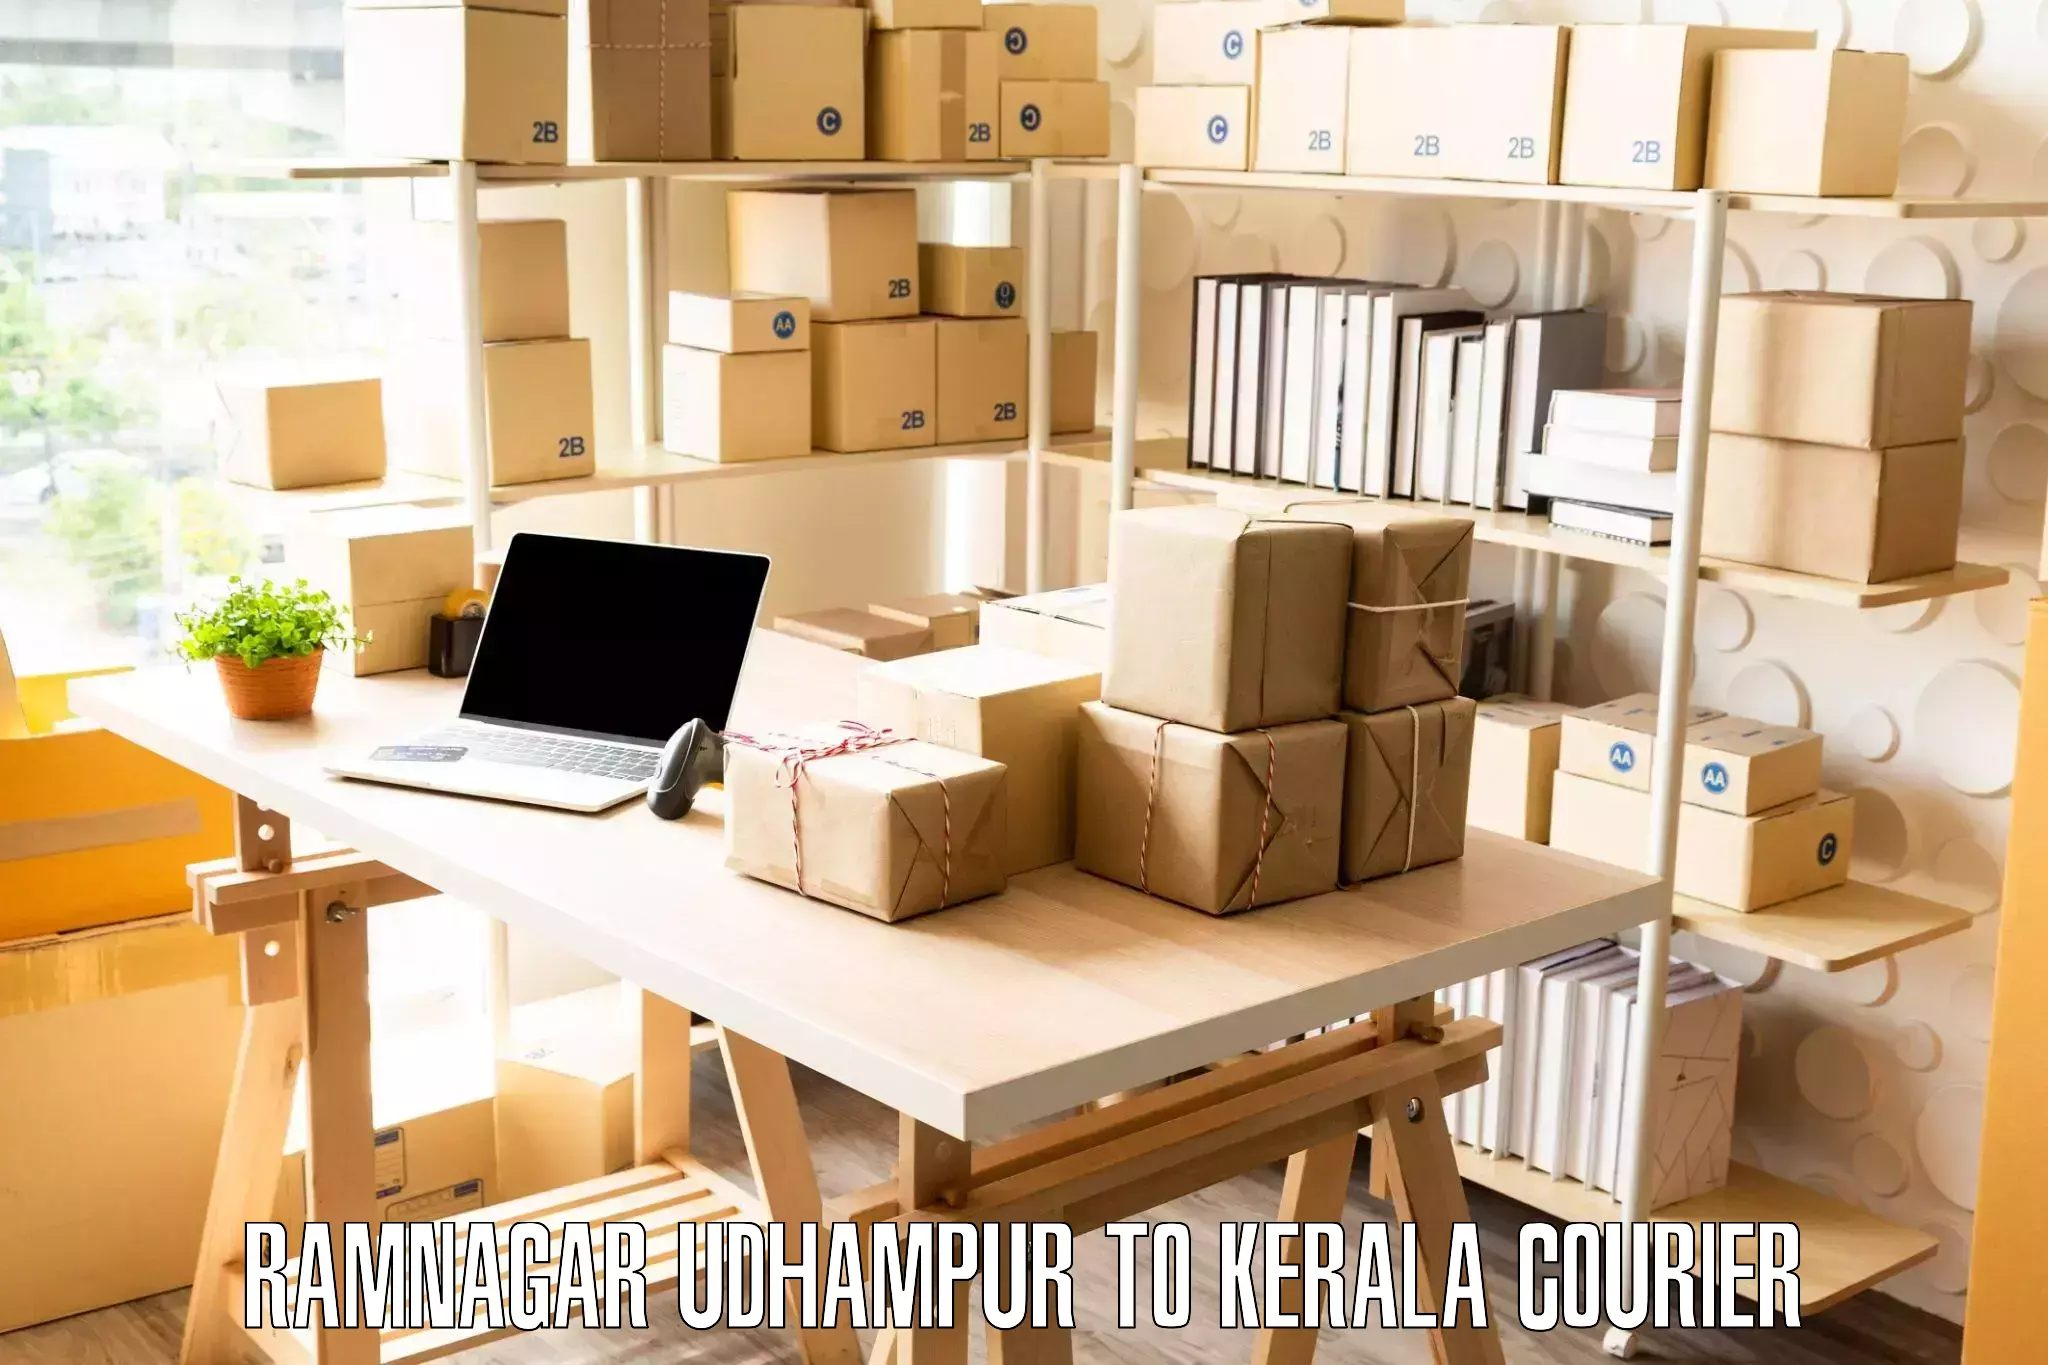 Expert furniture movers Ramnagar Udhampur to Kerala